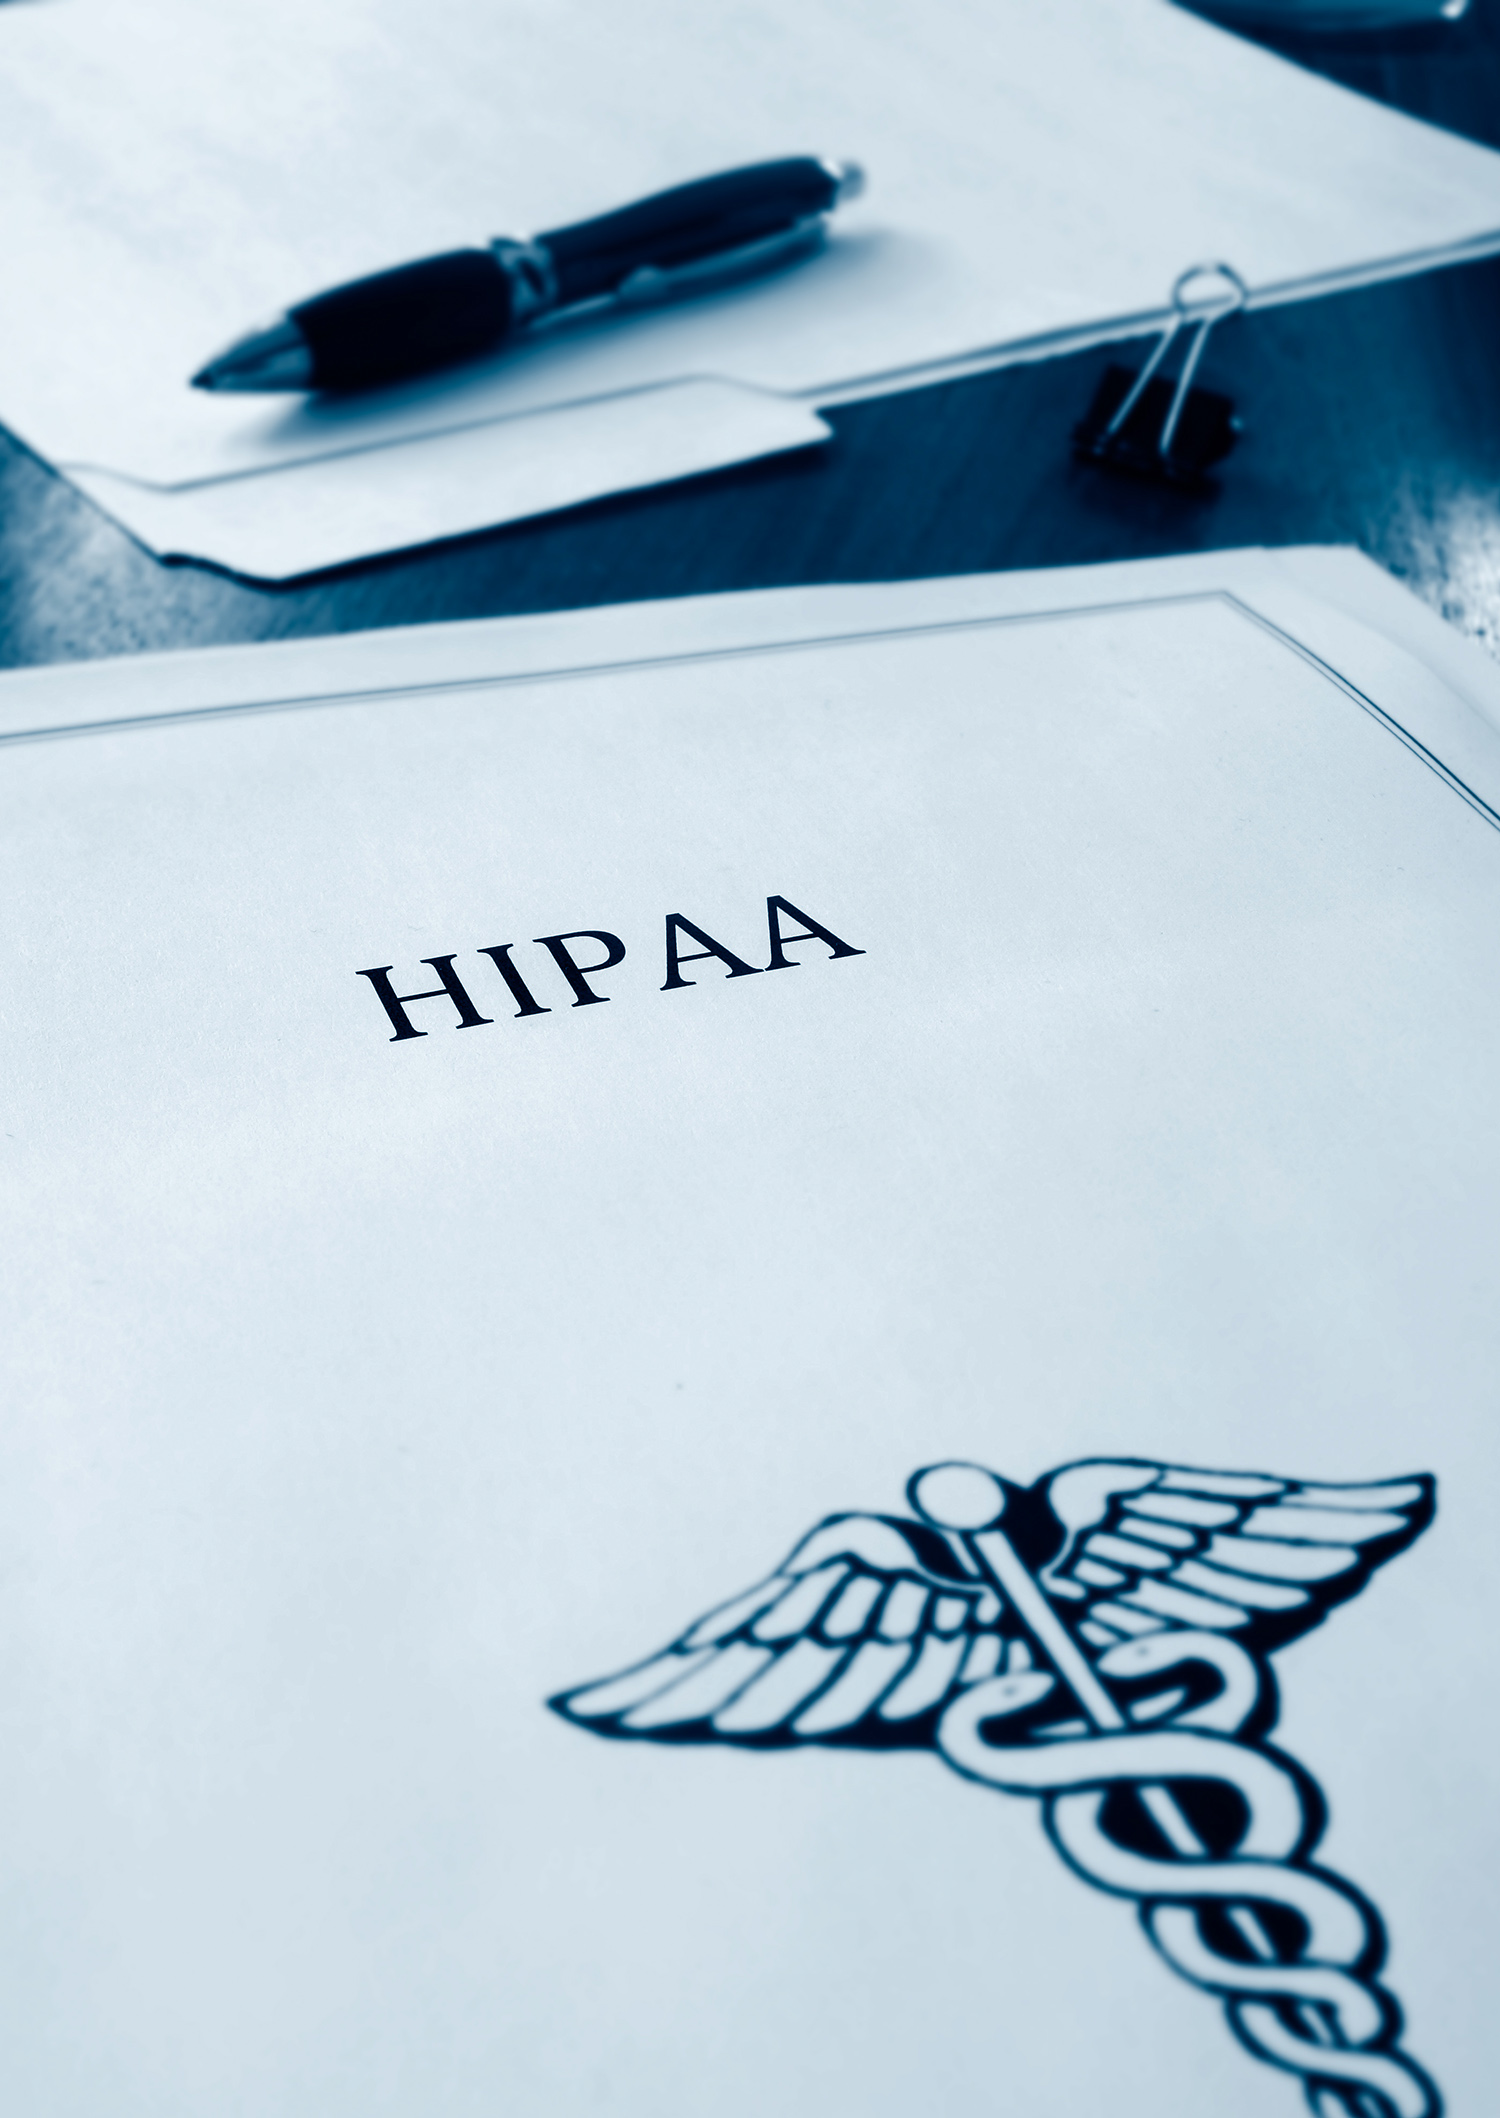 HIPAA rules